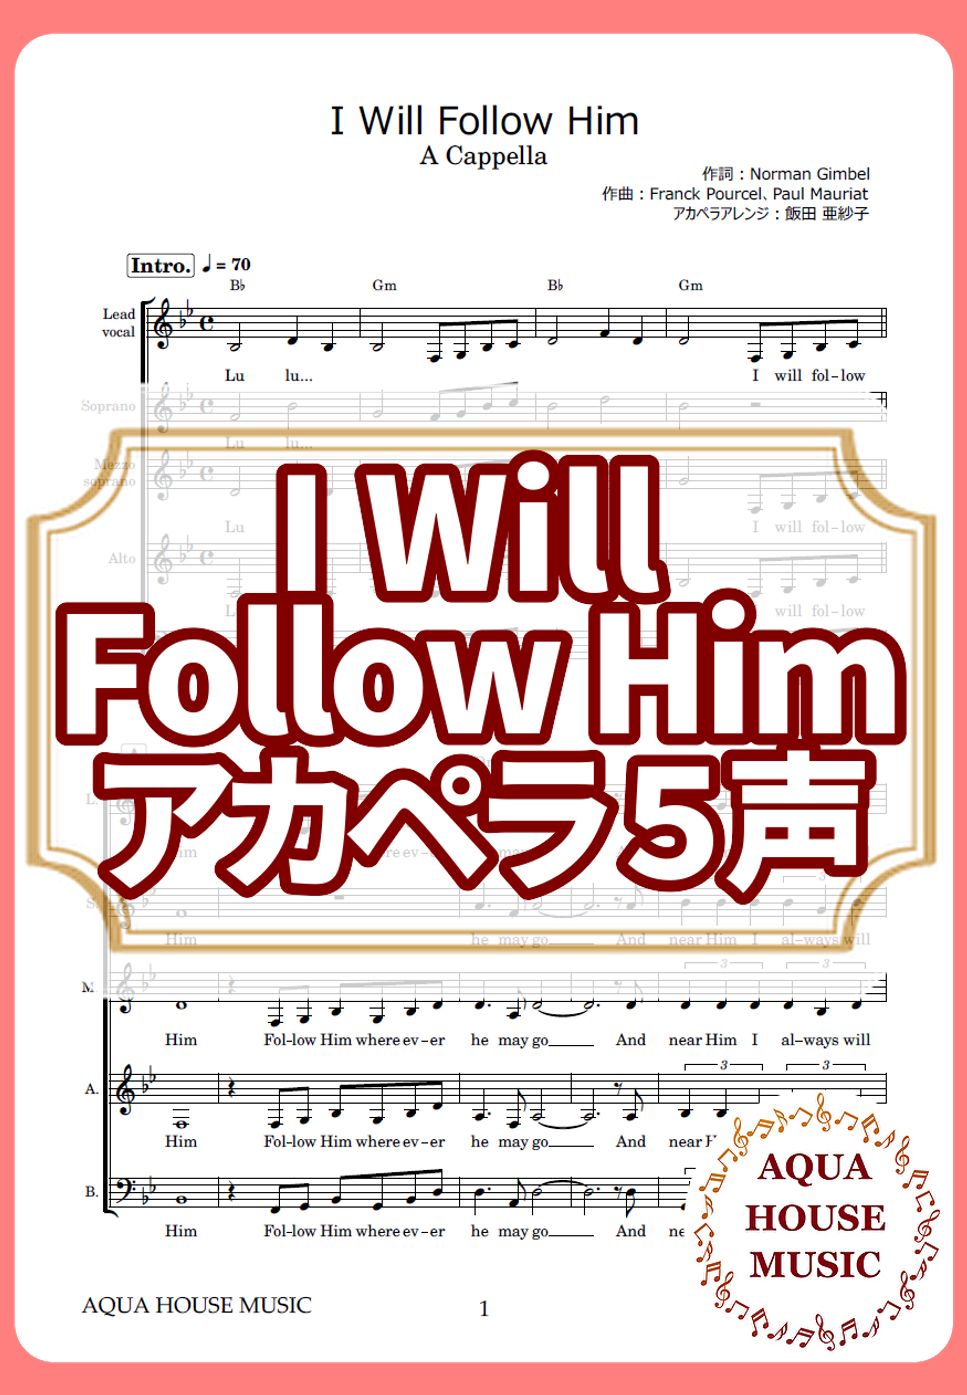 Sister Act - I Will Follow Him (アカペラ楽譜♪５声ボイパなし) by 飯田 亜紗子